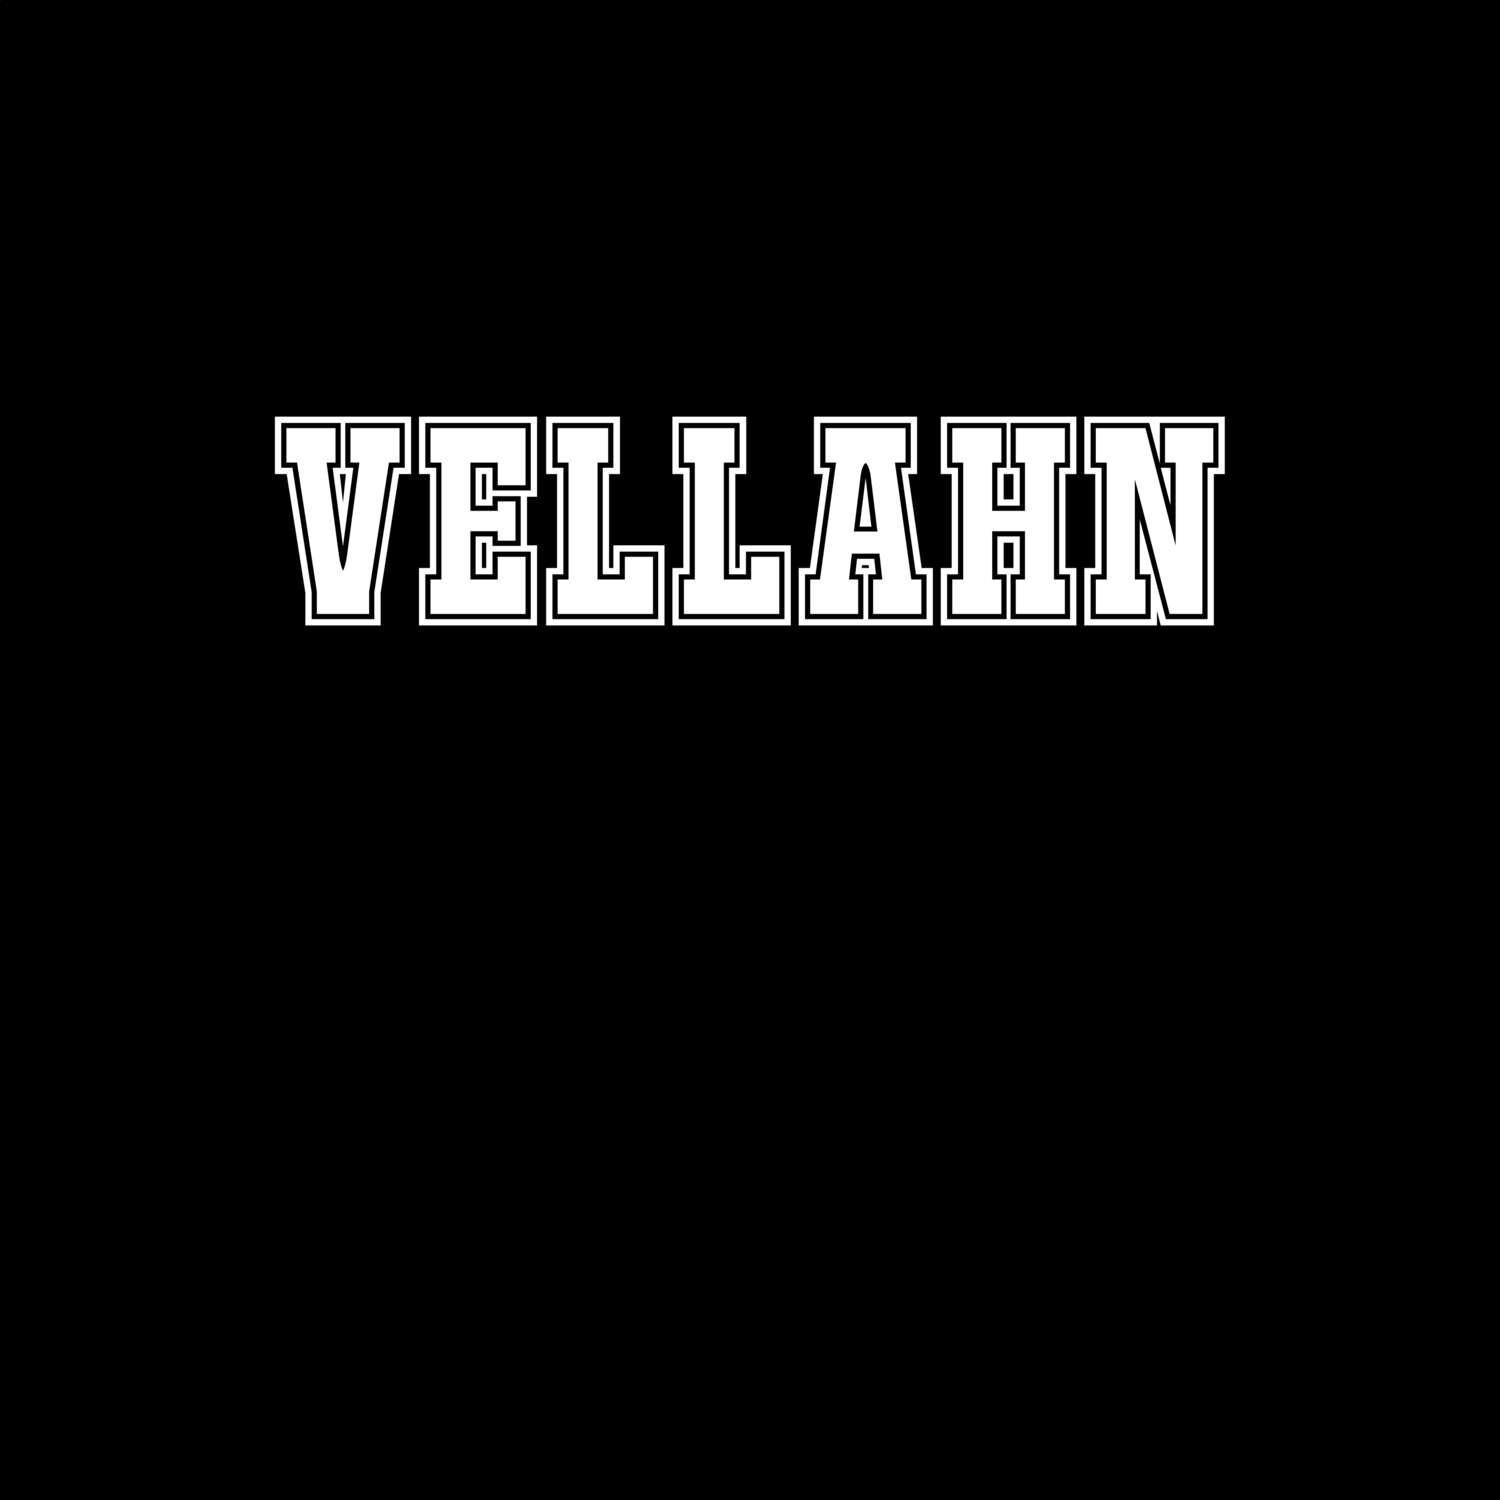 Vellahn T-Shirt »Classic«